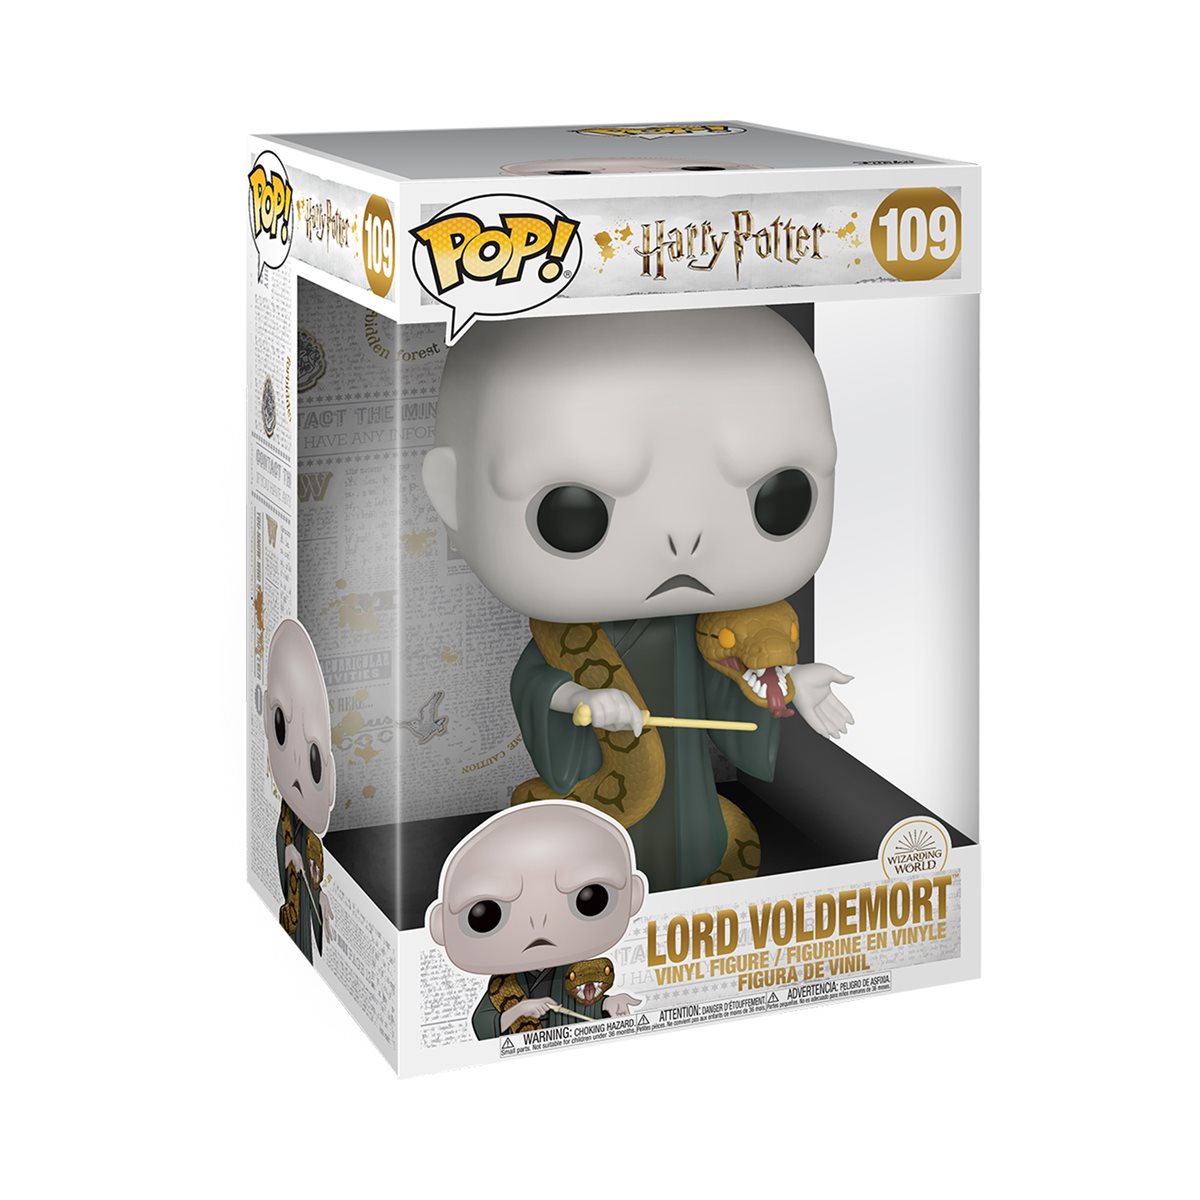 Funko Pop! Harry Potter: Voldemort and Nagini (10-Inch Deluxe) #109